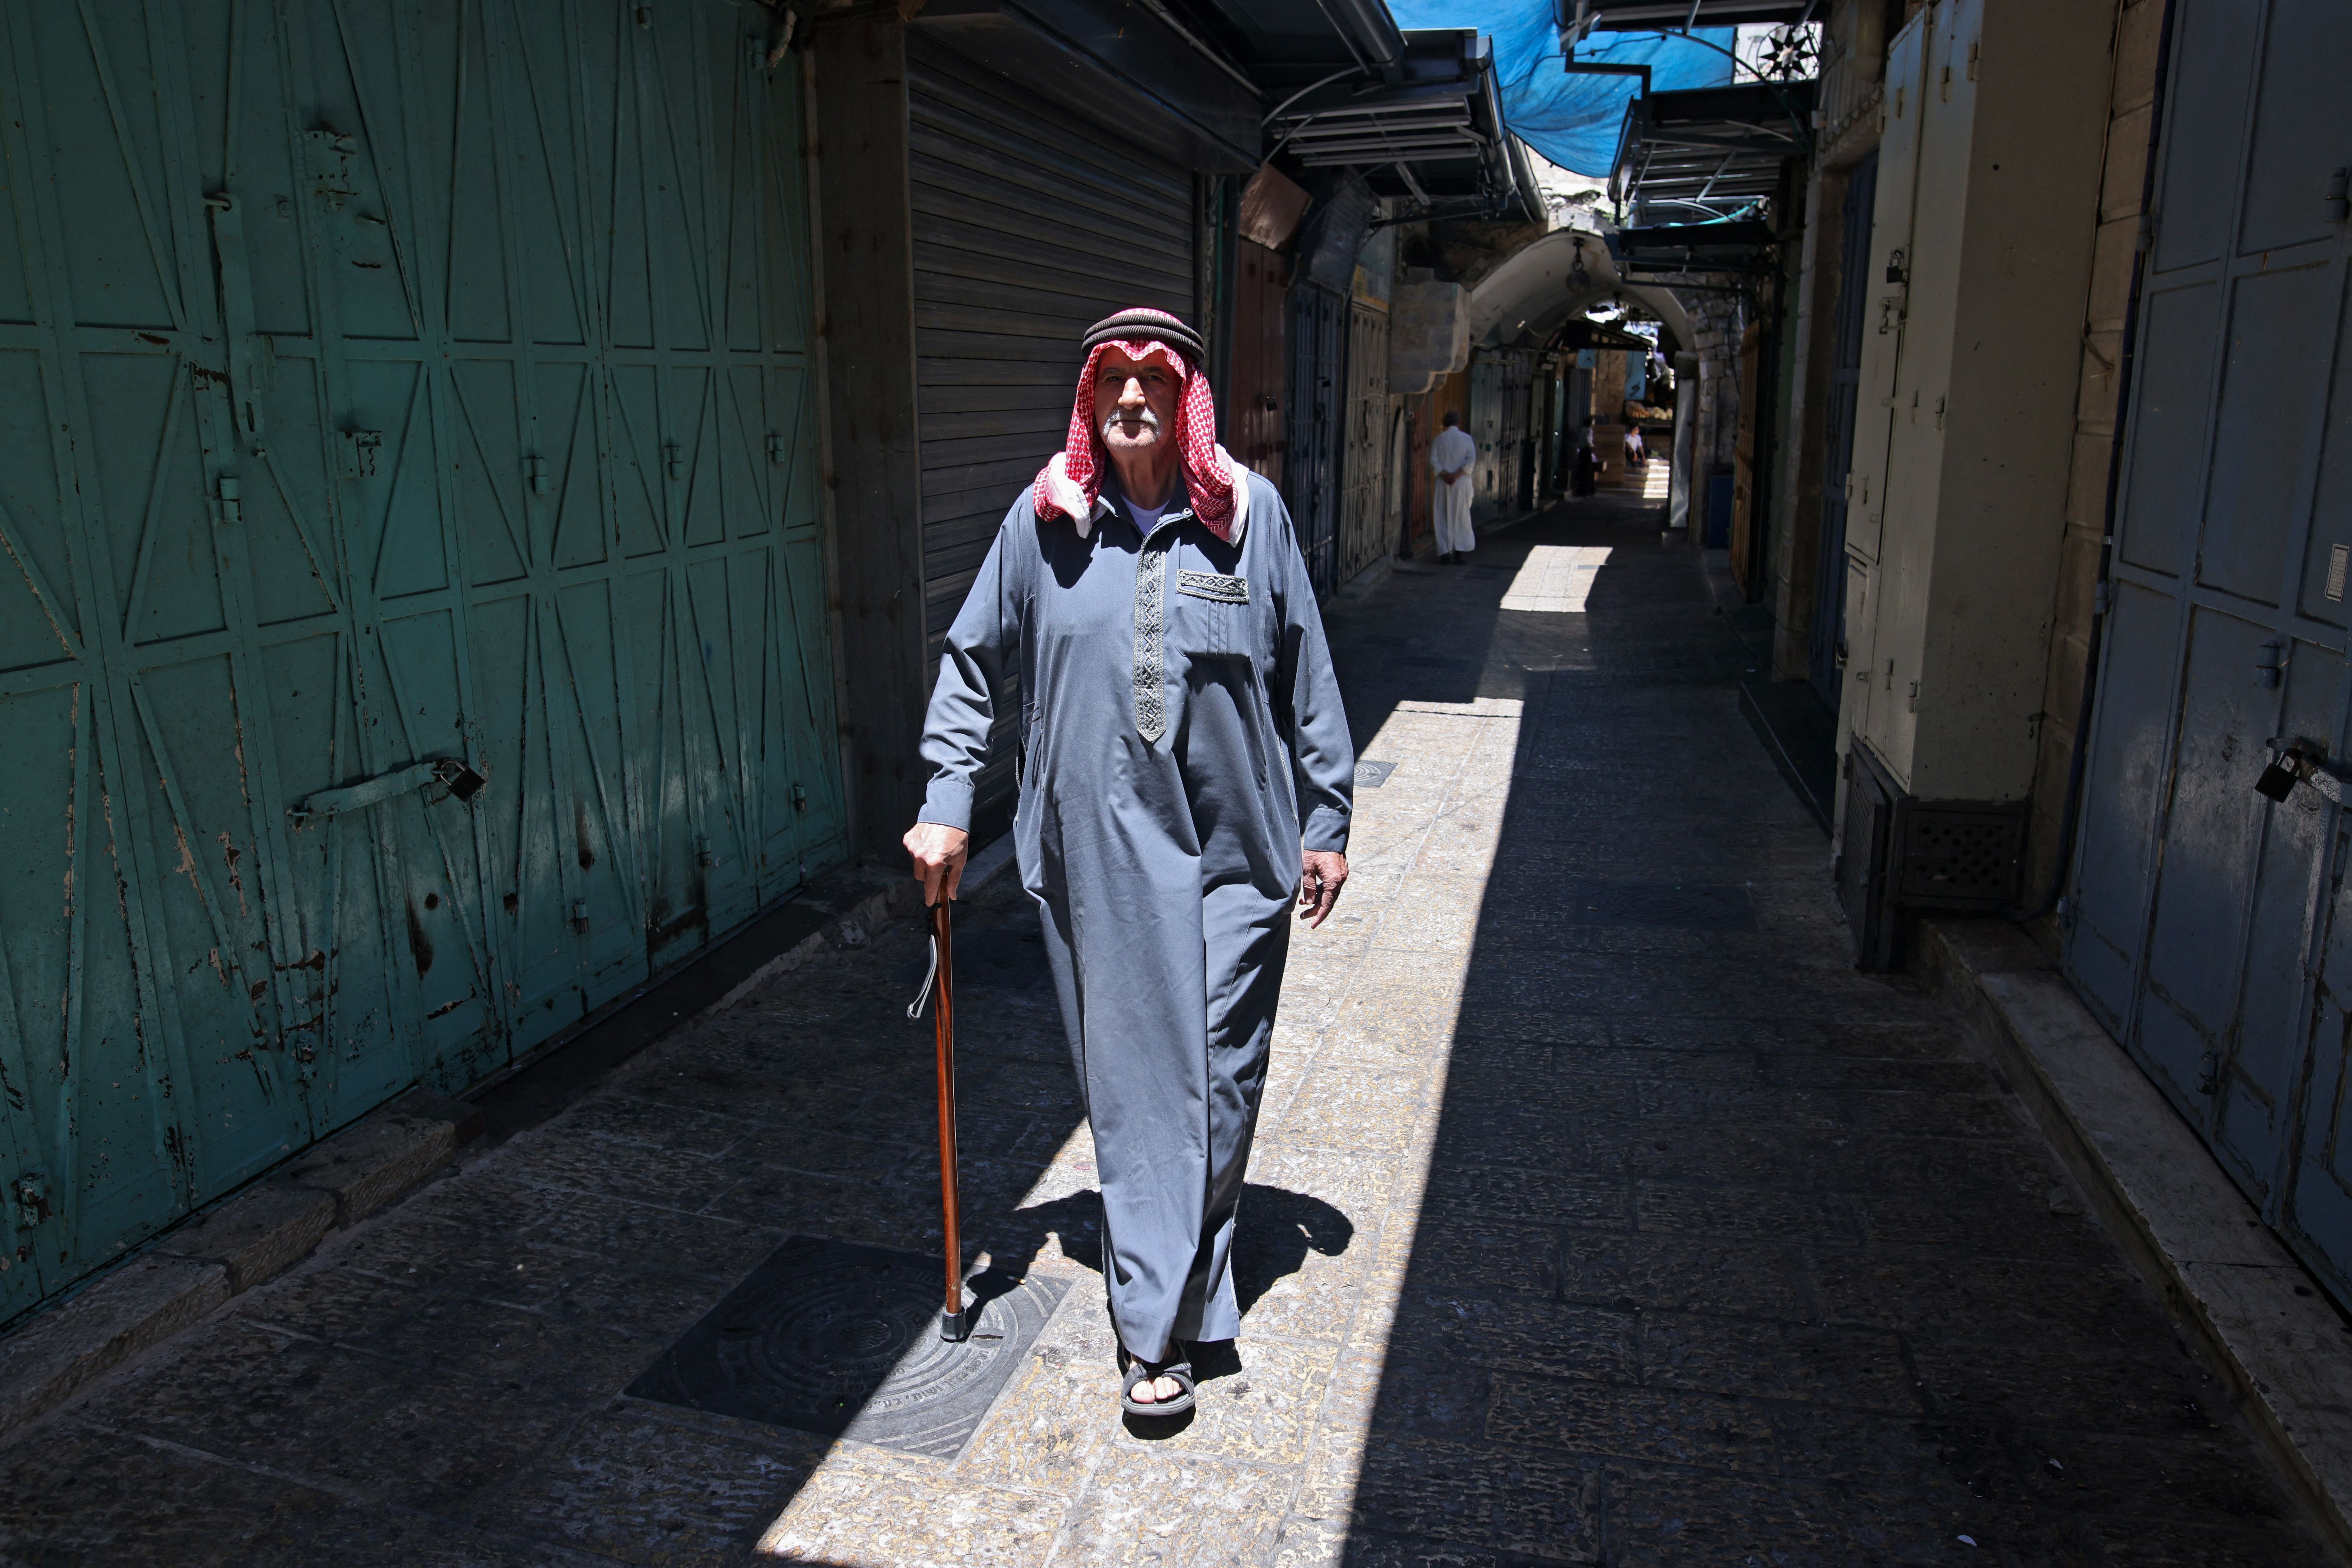 A Palestinian man walks past shuttered stores in East Jerusalem. Photo: Ahmad Gharabli/AFP via Getty Images